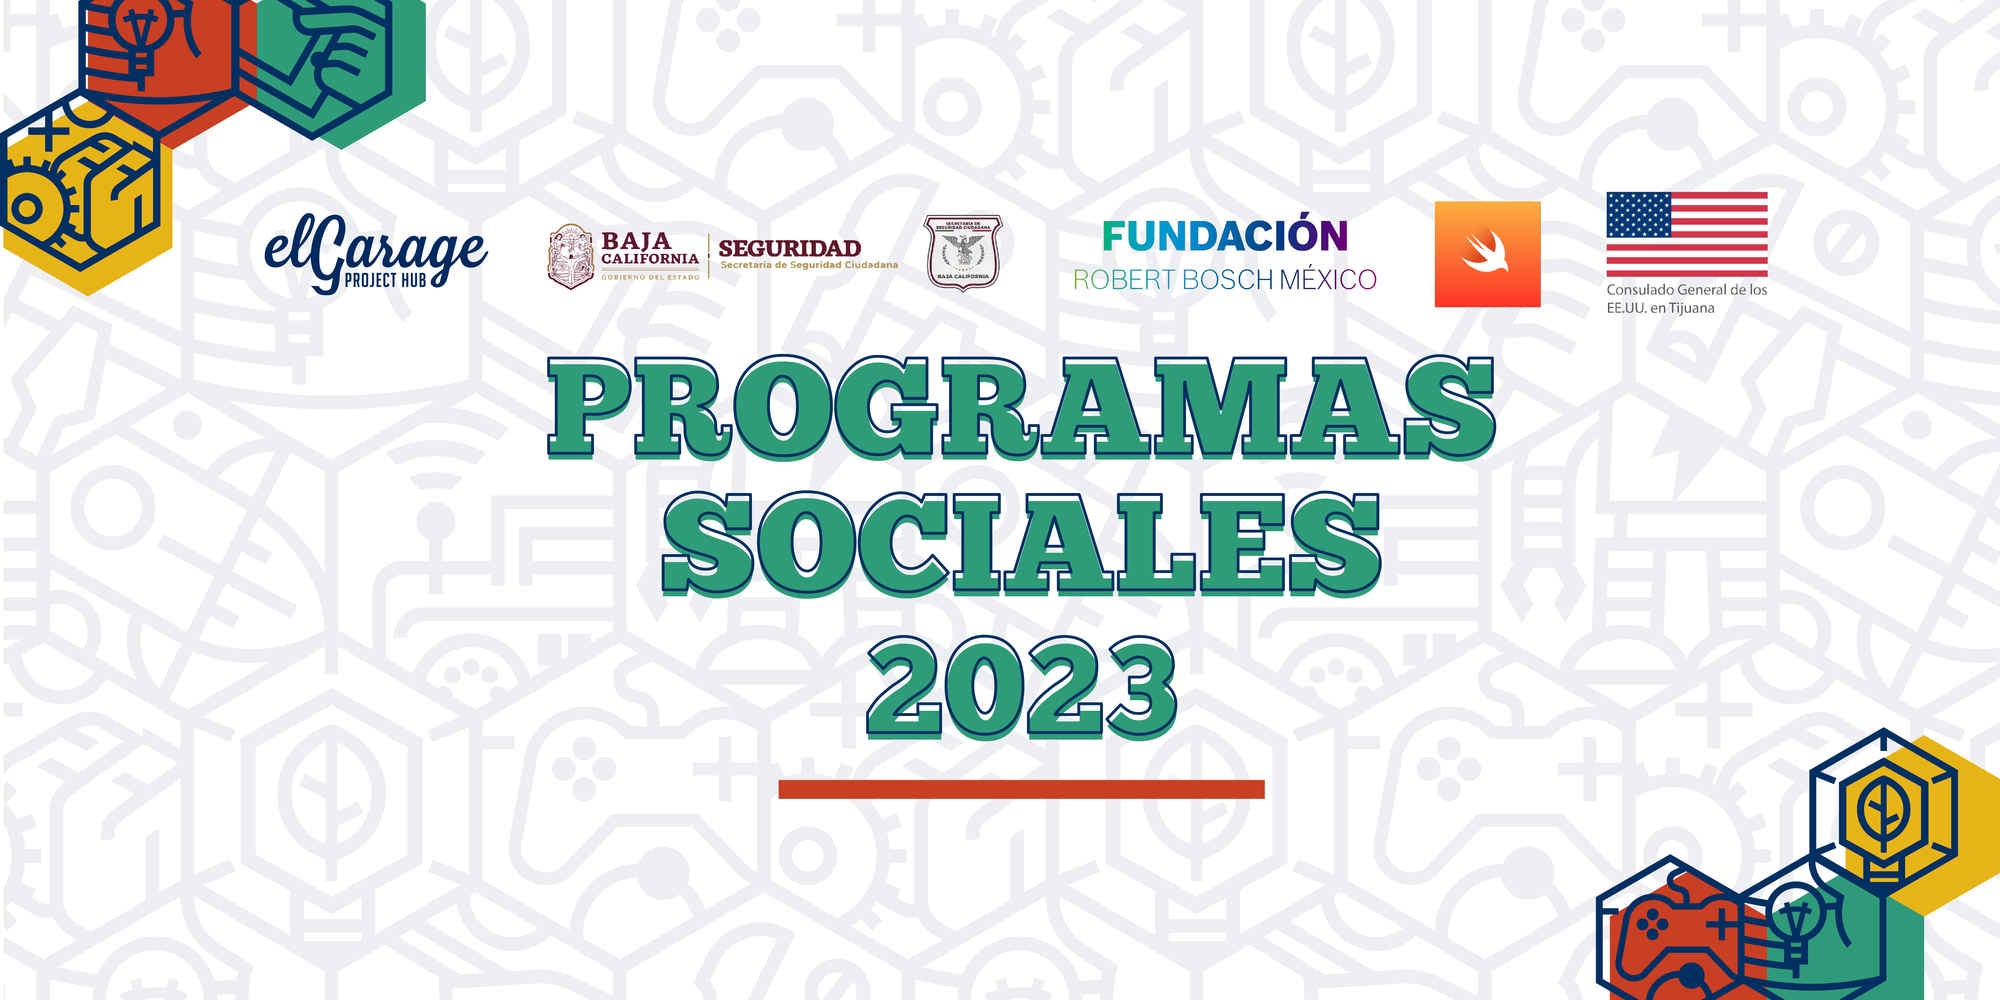 Promueve El Garage Project Hub programas de impacto social